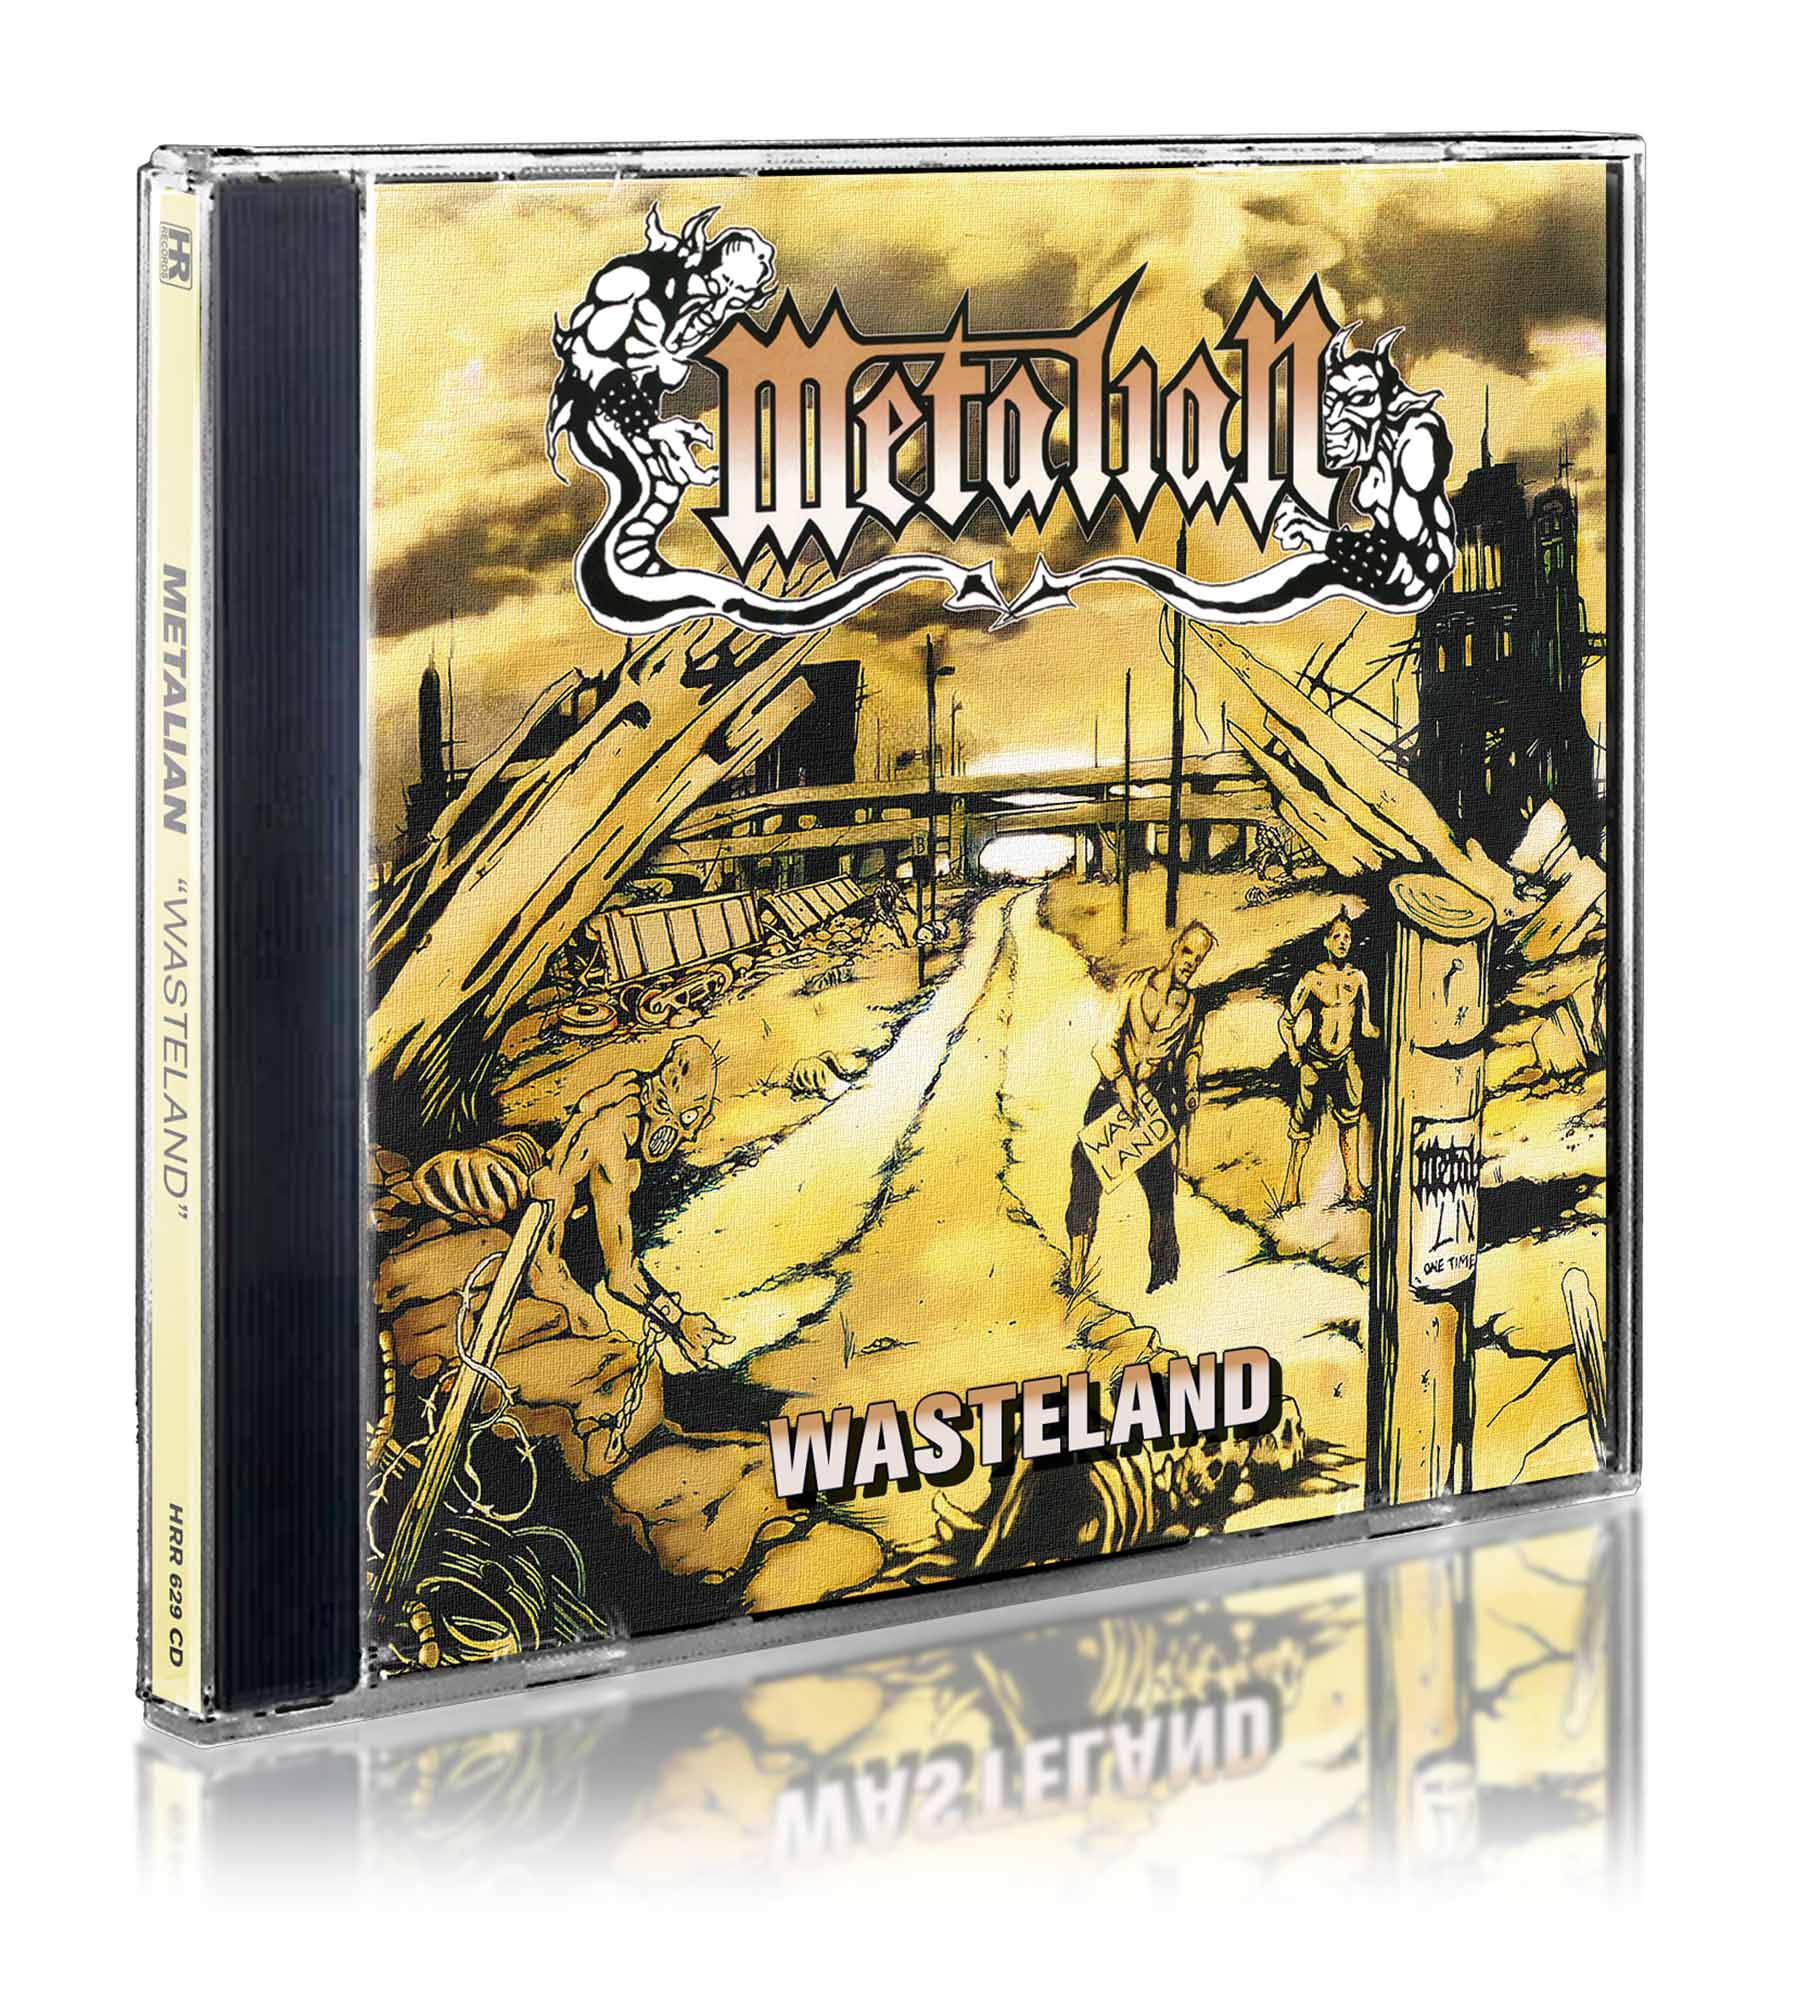 METALIAN - Wasteland  CD